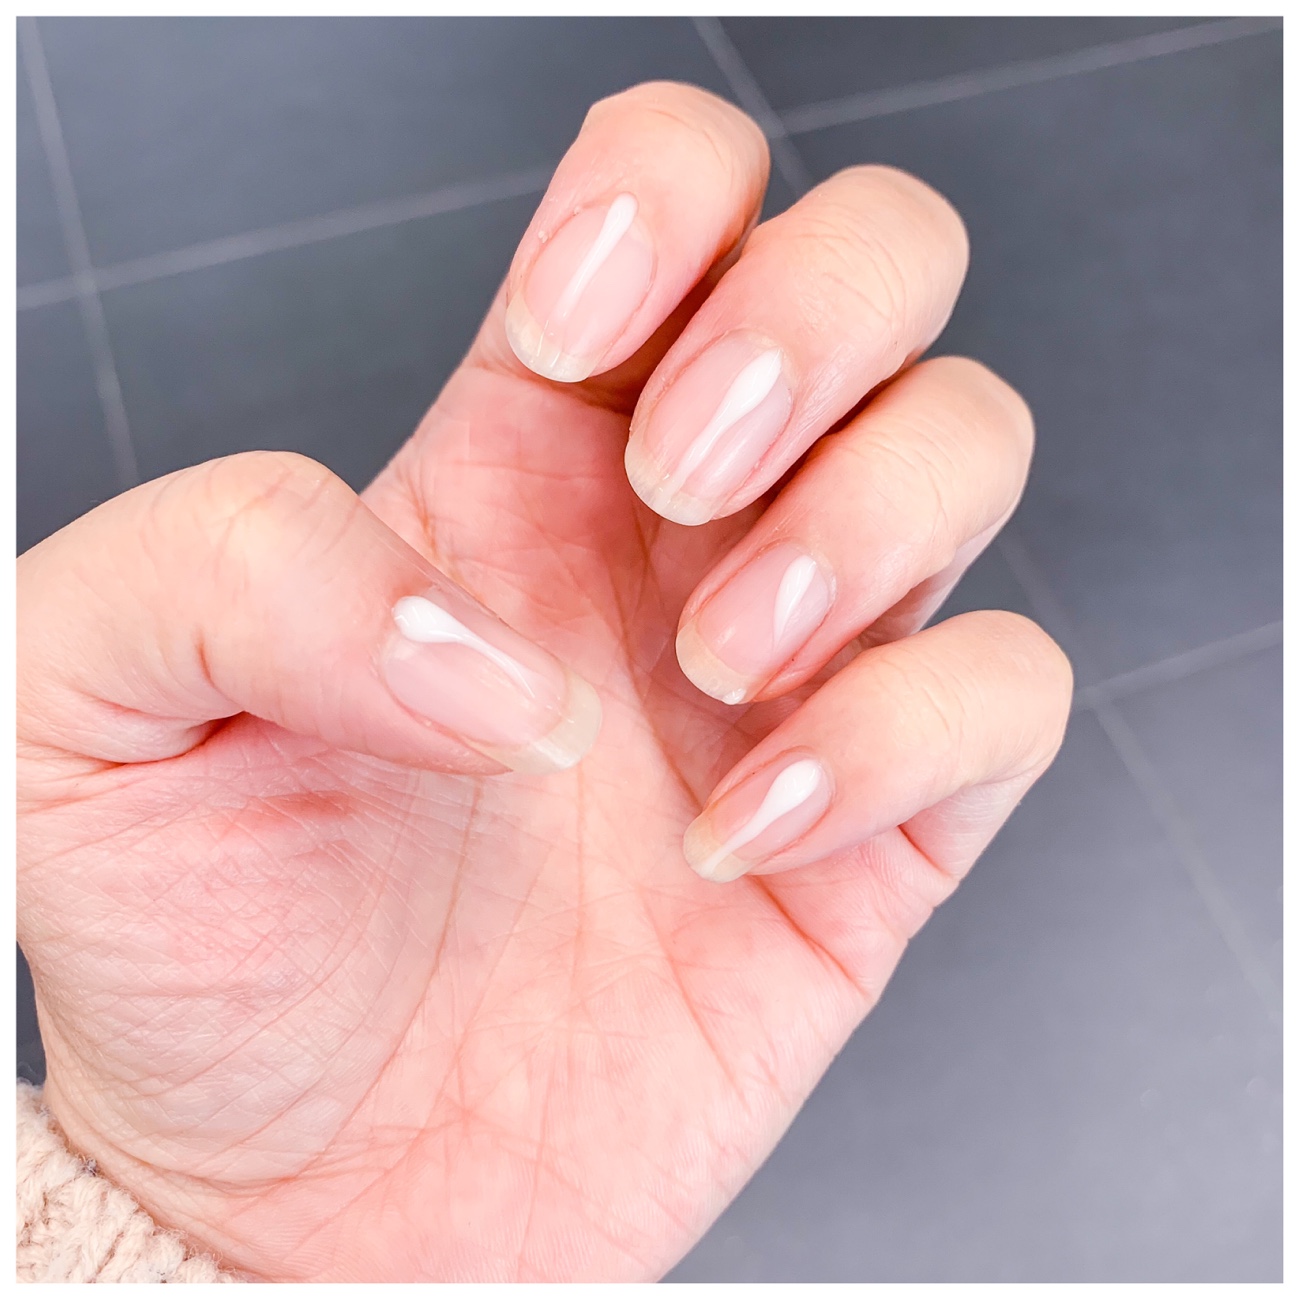 Strengthening my nails with Revitanail Keratin Protein Serum Nail Treatment